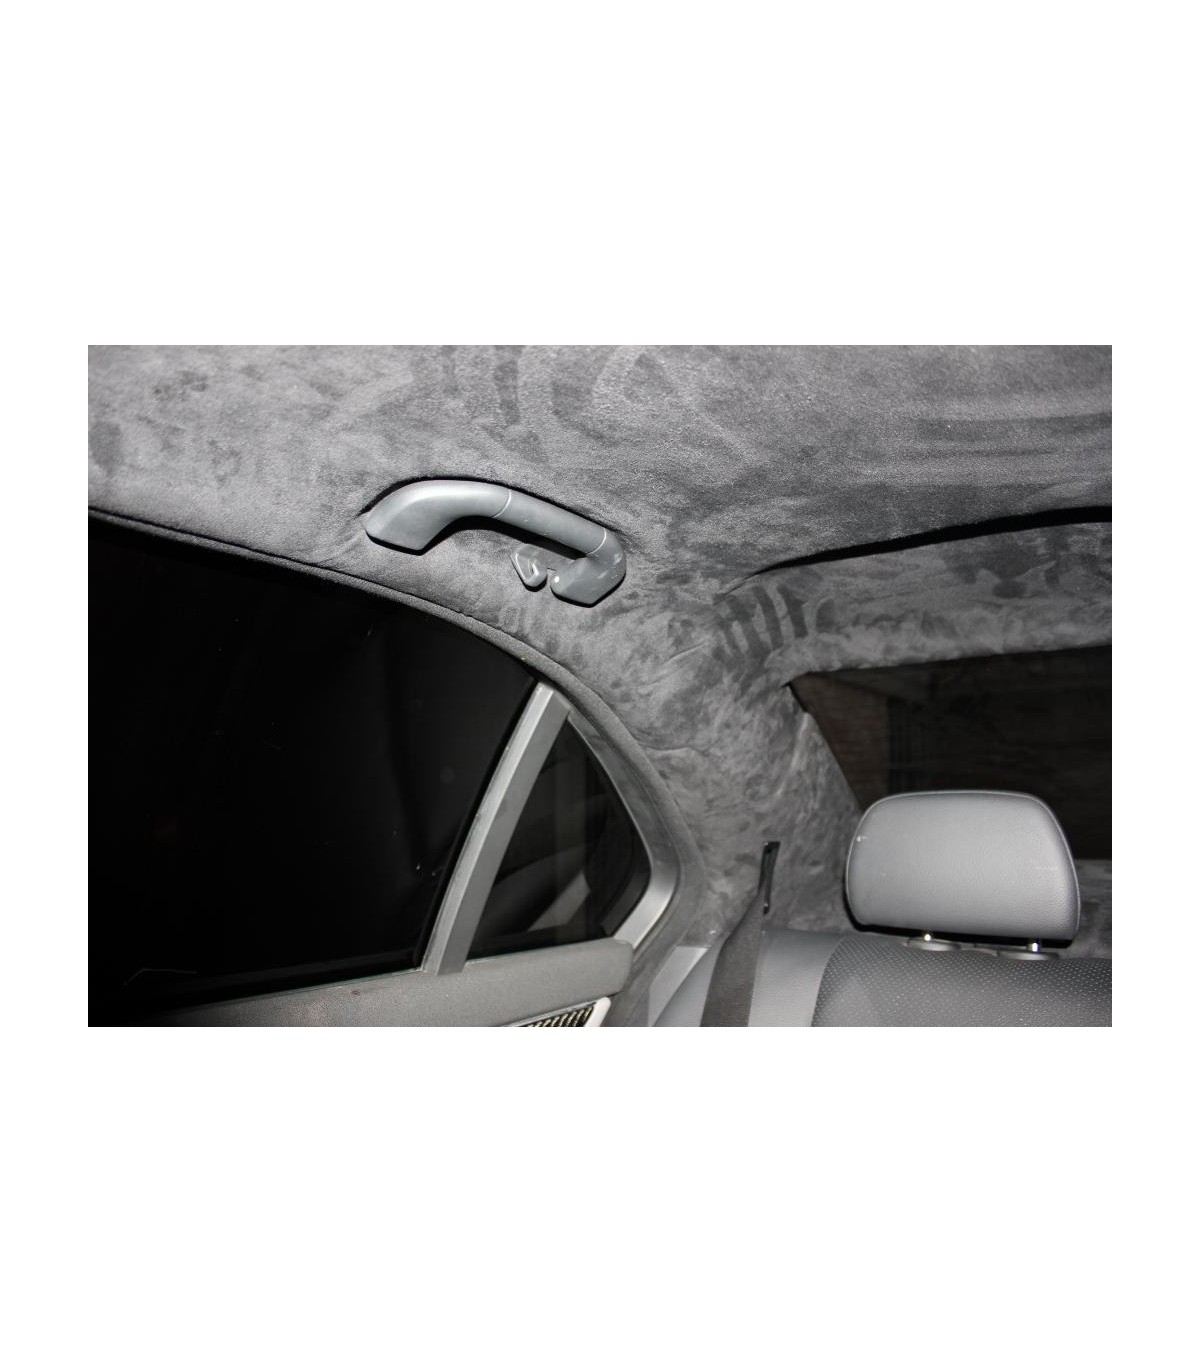 Tela de Alcantara autoadhesiva para Interior de coche, tapicería